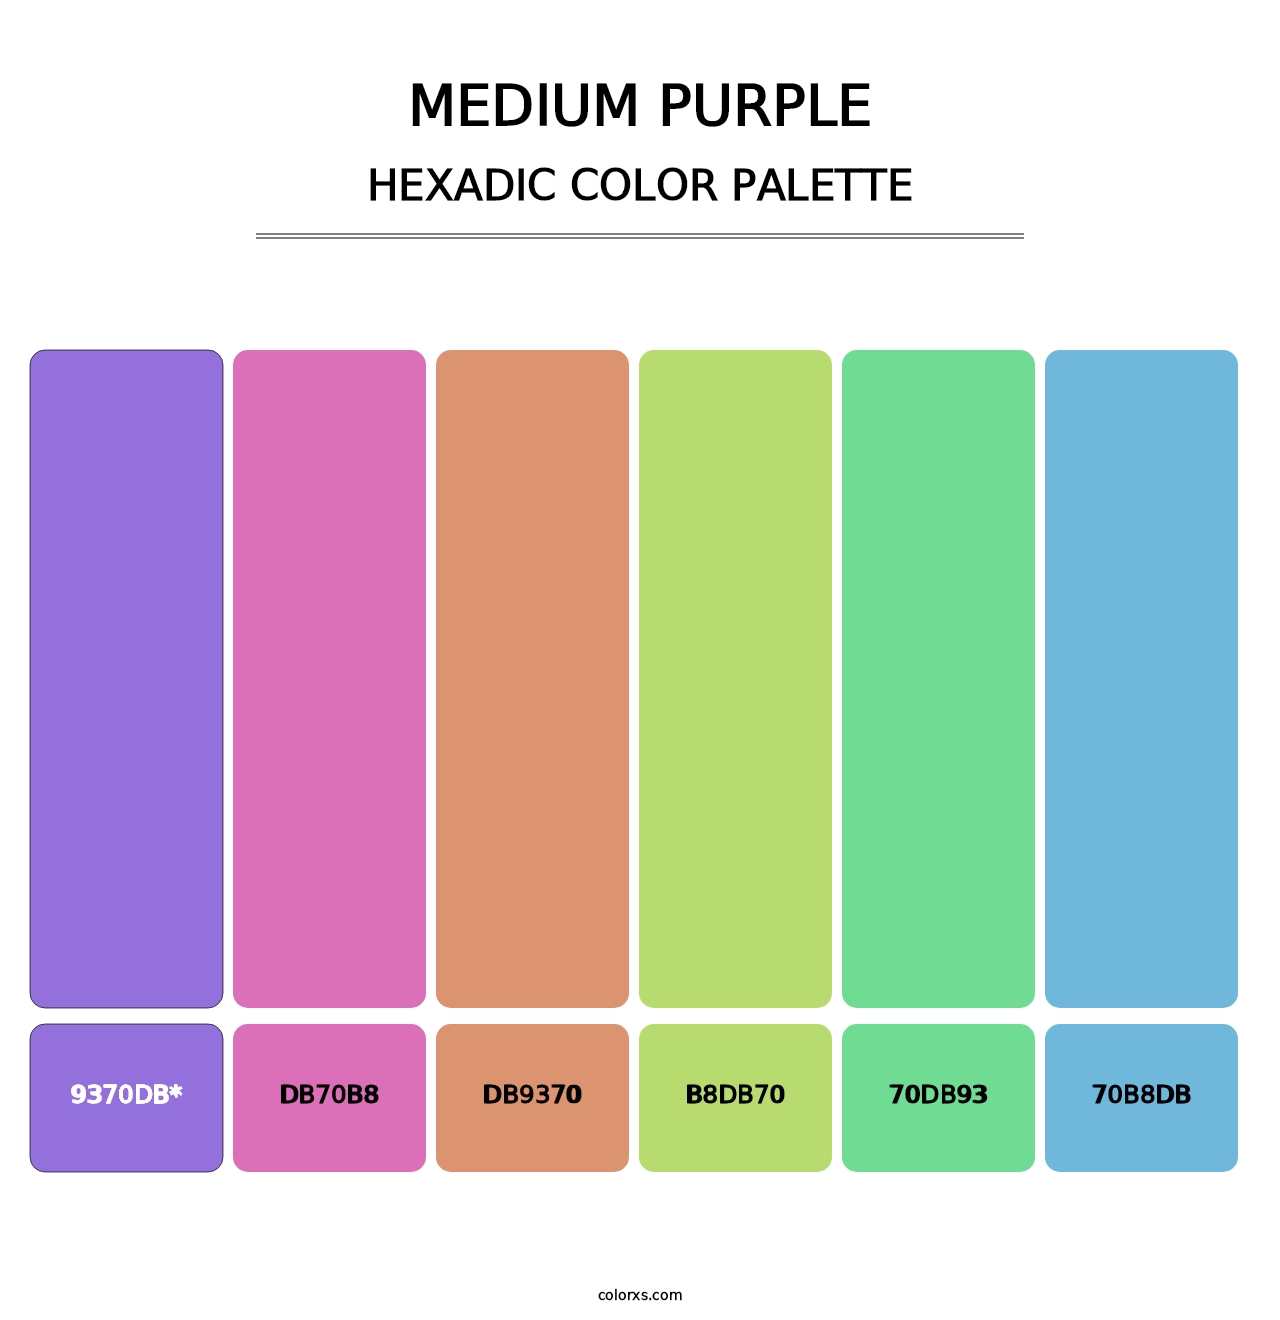 Medium Purple - Hexadic Color Palette